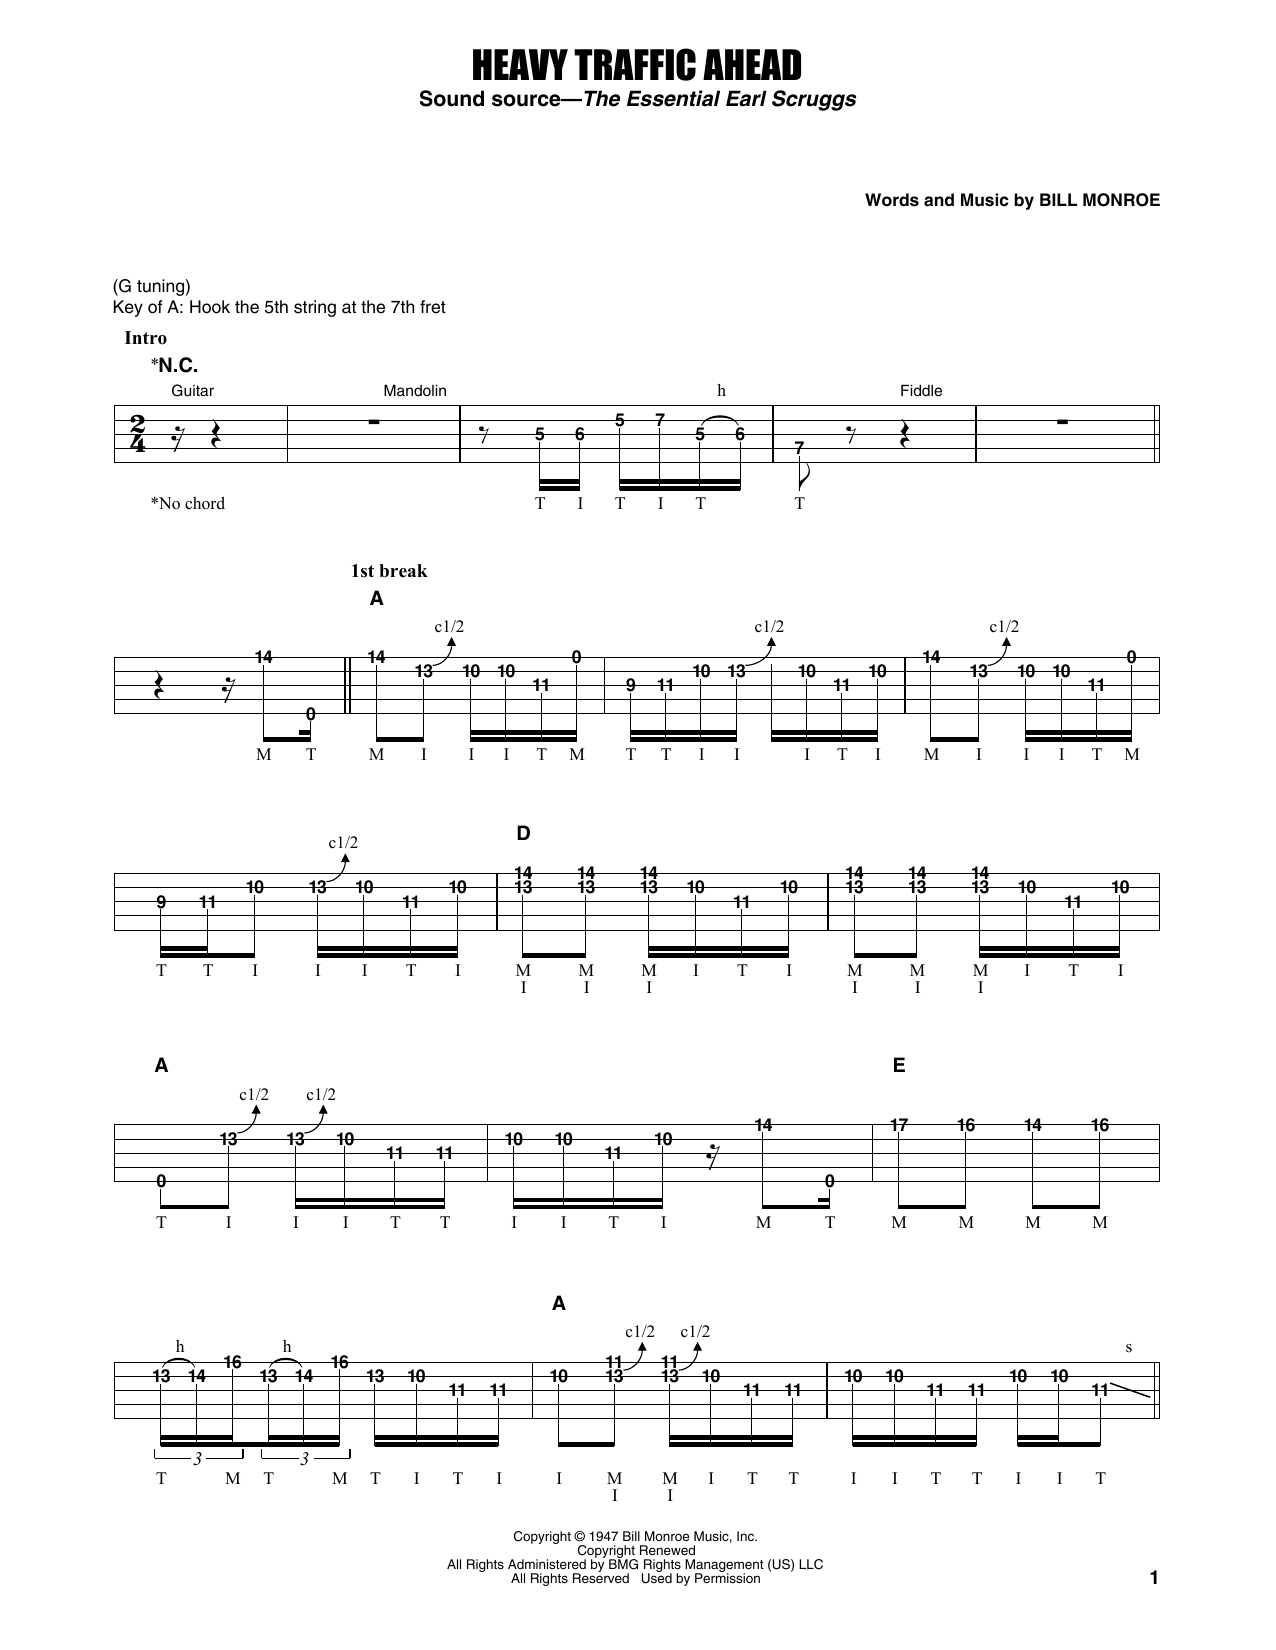 Earl Scruggs Heavy Traffic Ahead Sheet Music Notes & Chords for Banjo Tab - Download or Print PDF